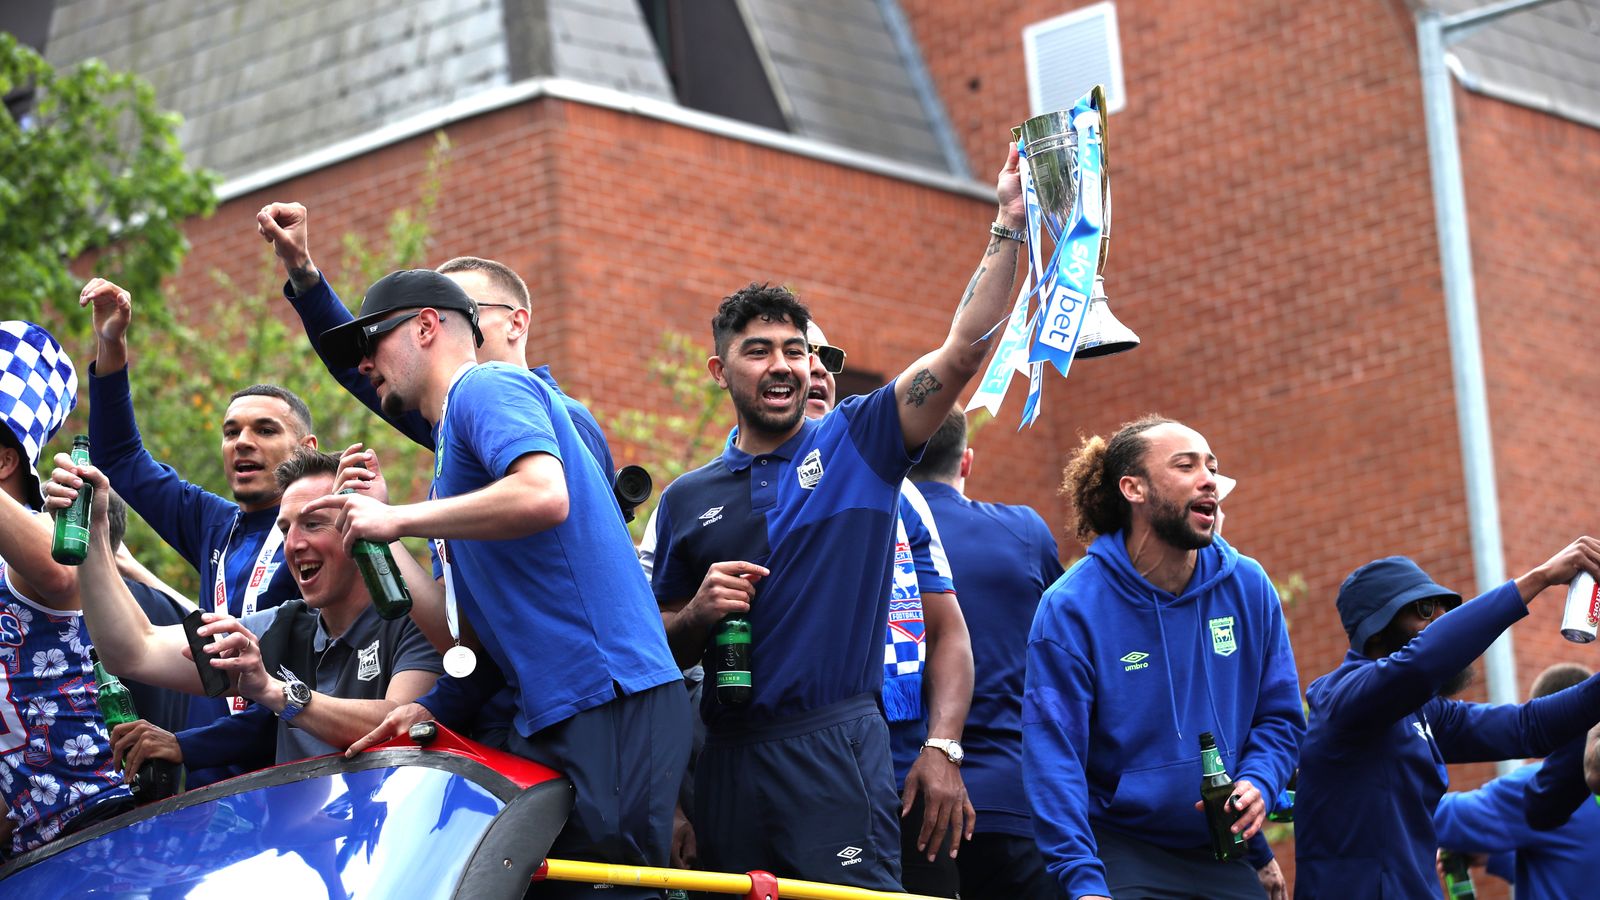 ipswich town fans enjoy 'long-awaited' celebrations after premier league promotion